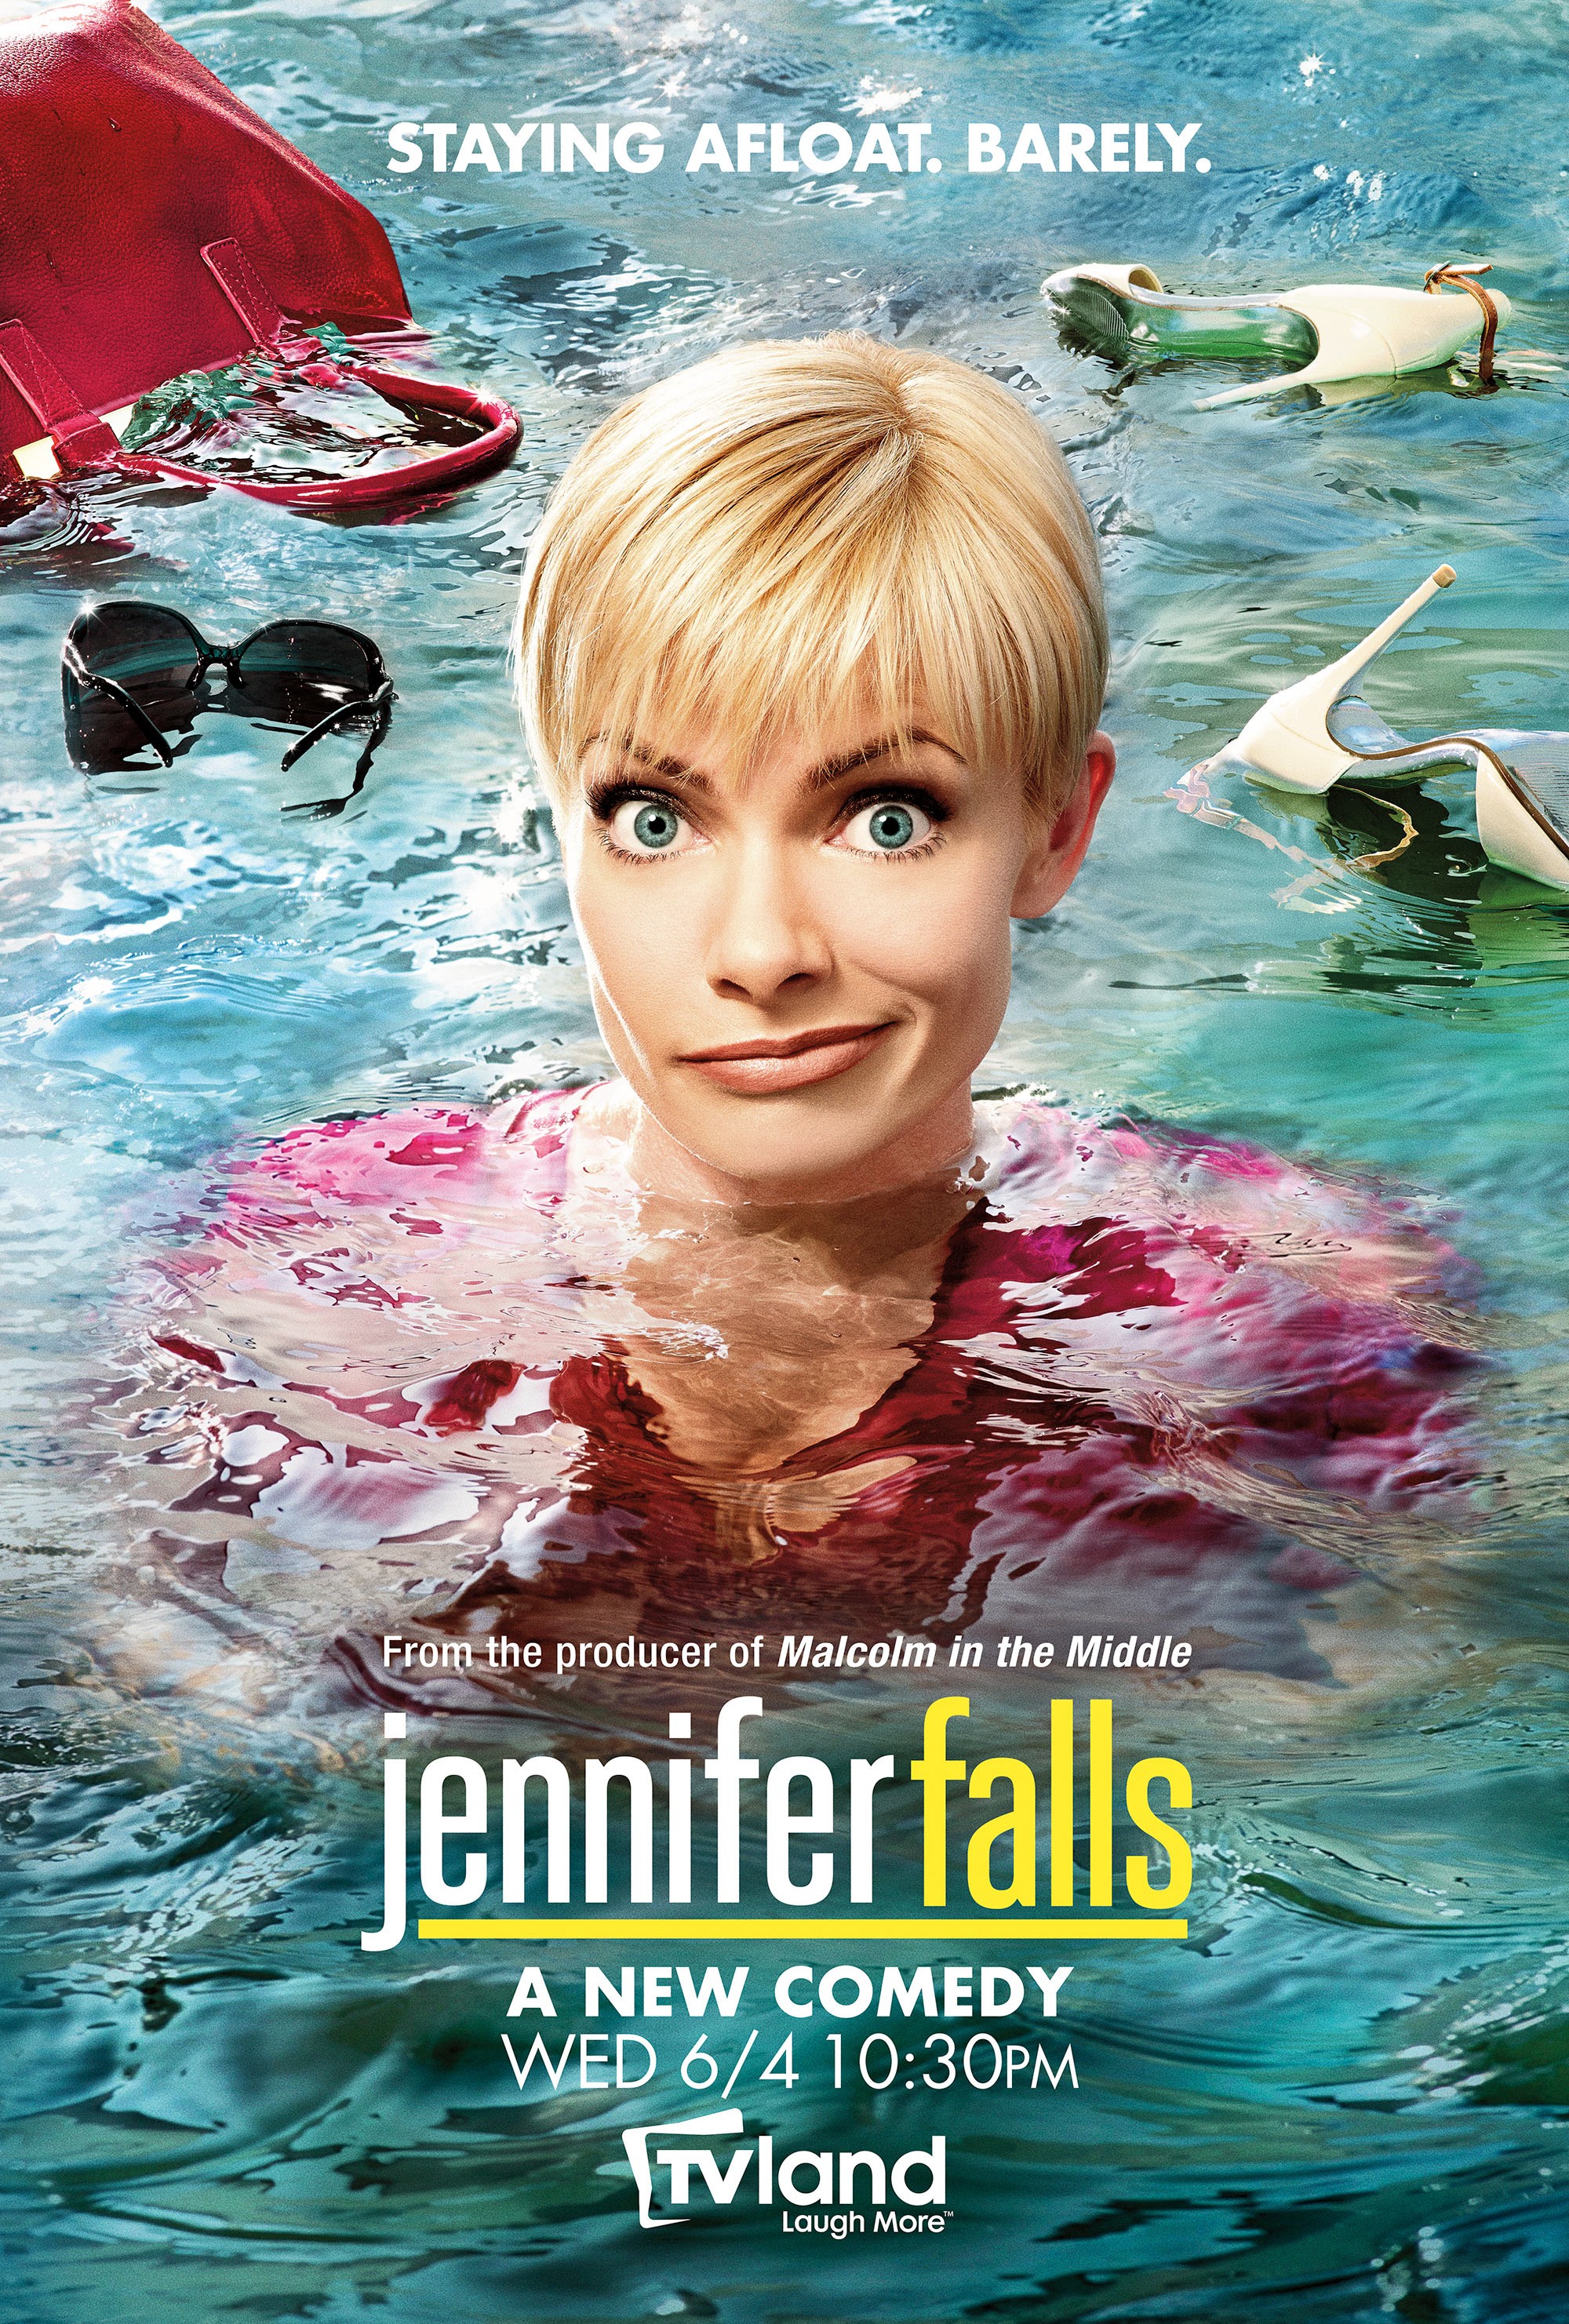 Mega Sized TV Poster Image for Jennifer Falls (#1 of 2)